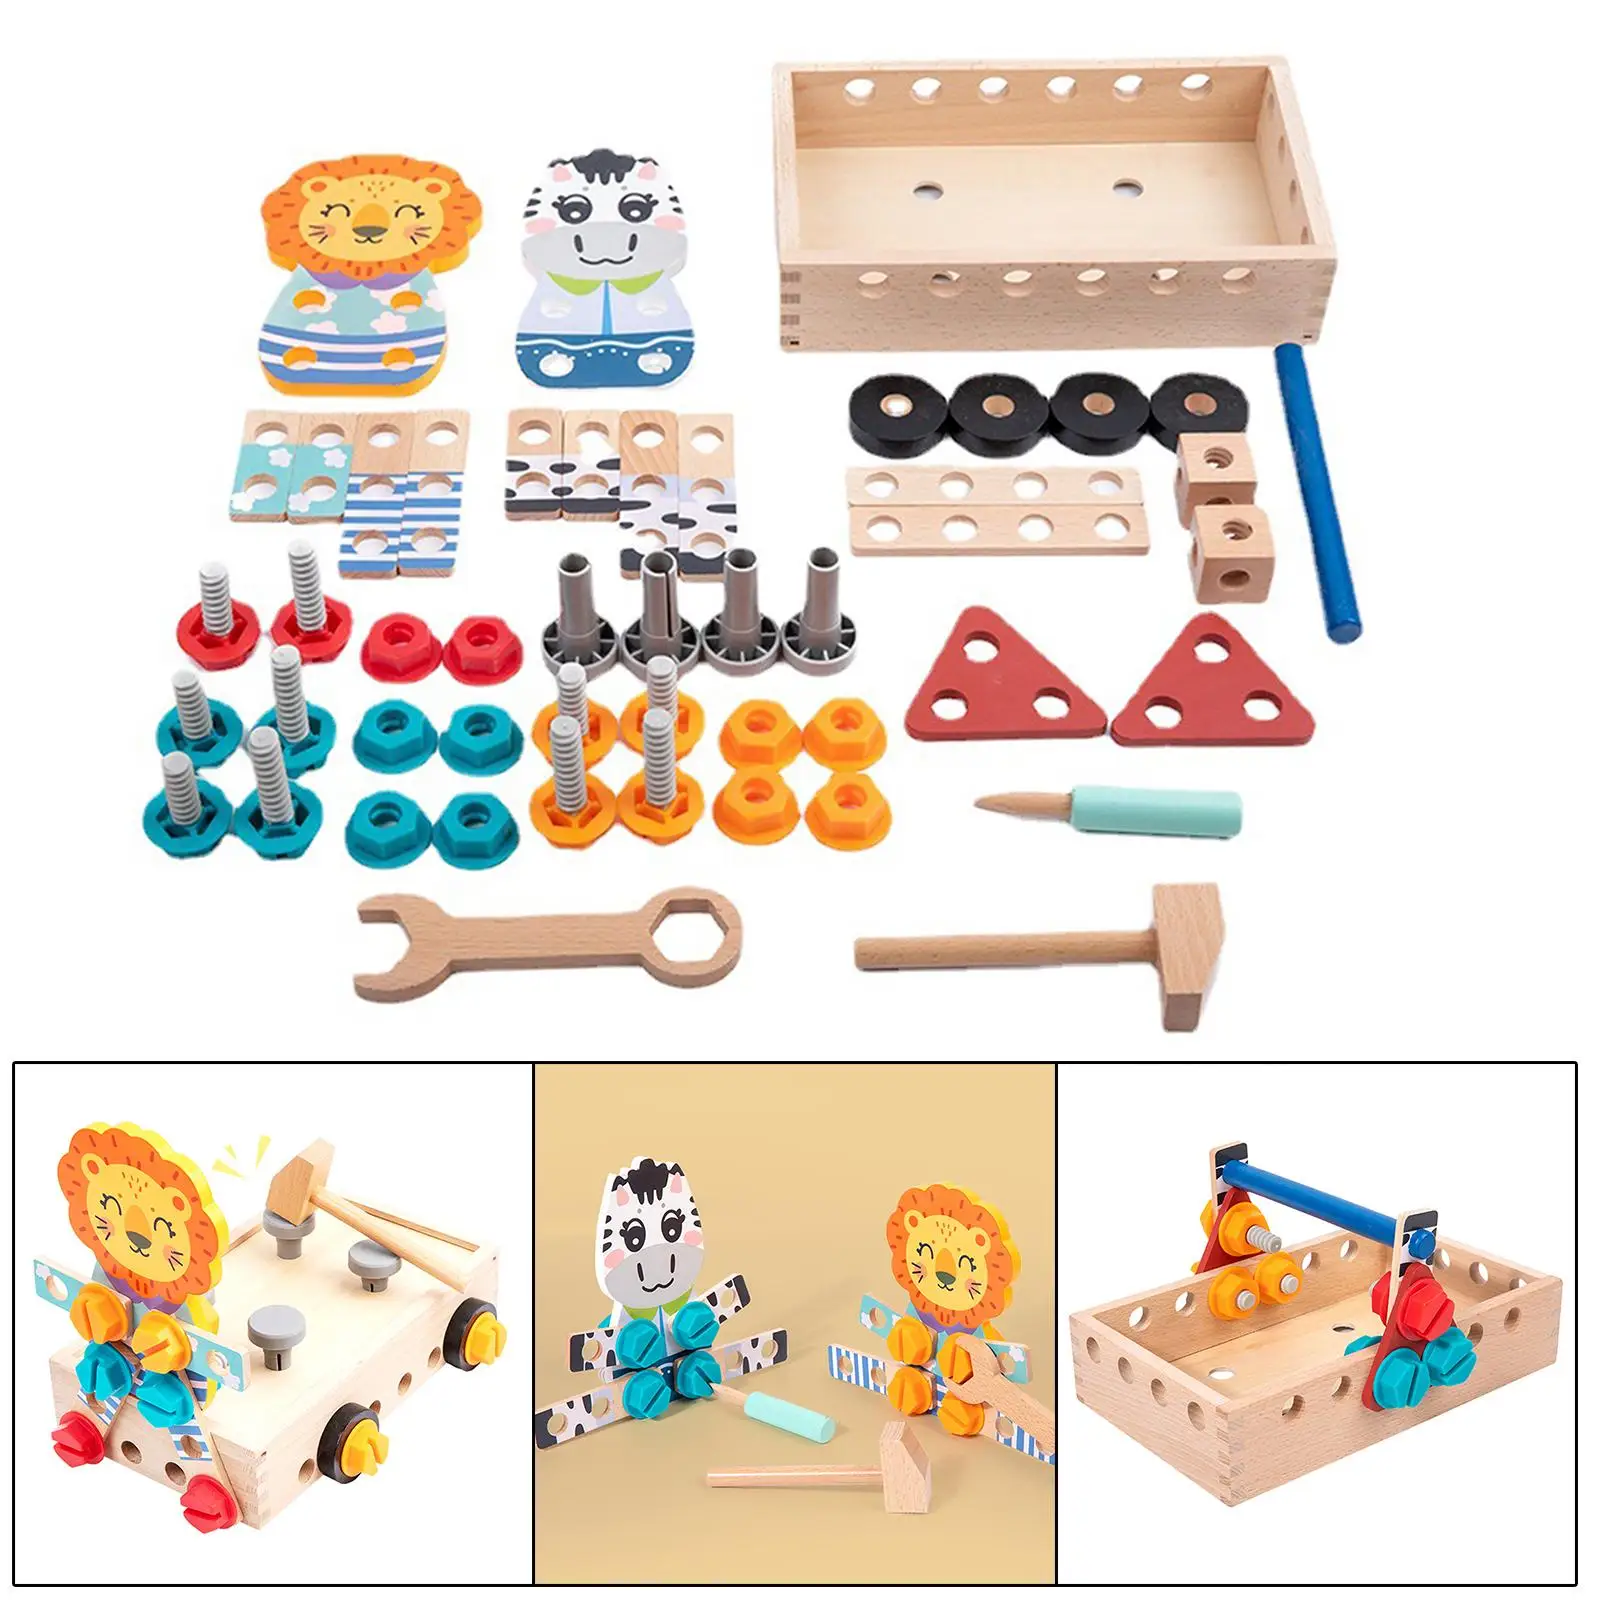 DIY Construction Toy Cognitive Developmental montessori Toolbox Set for Indoor Preschool Education Role Play Outdoor